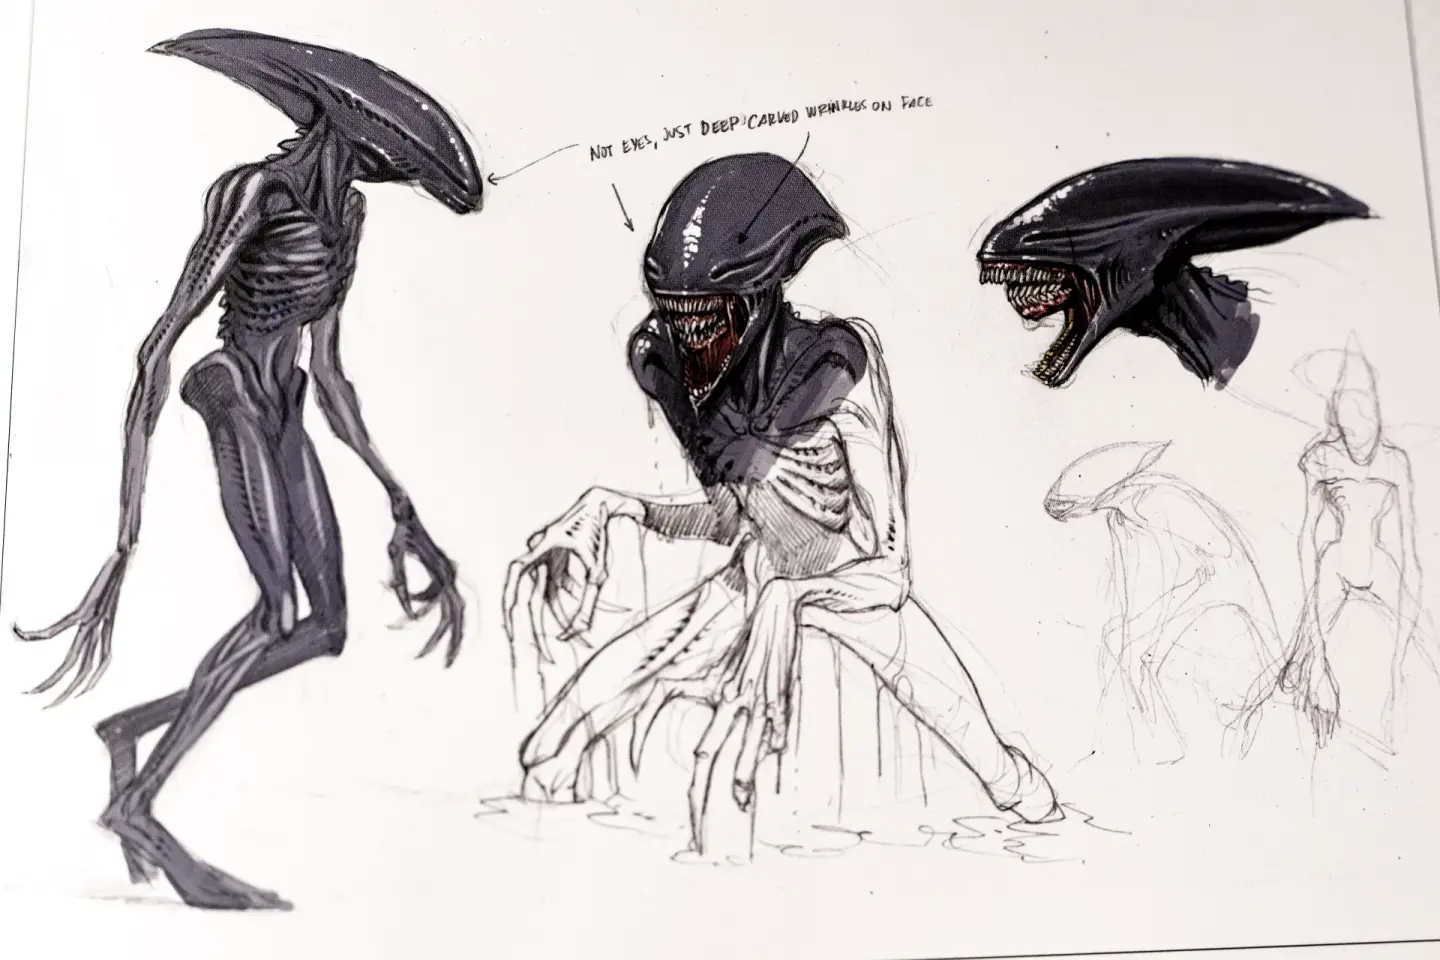 Deacon vs. Xenomorph confrontation in Alien: Covenant? 